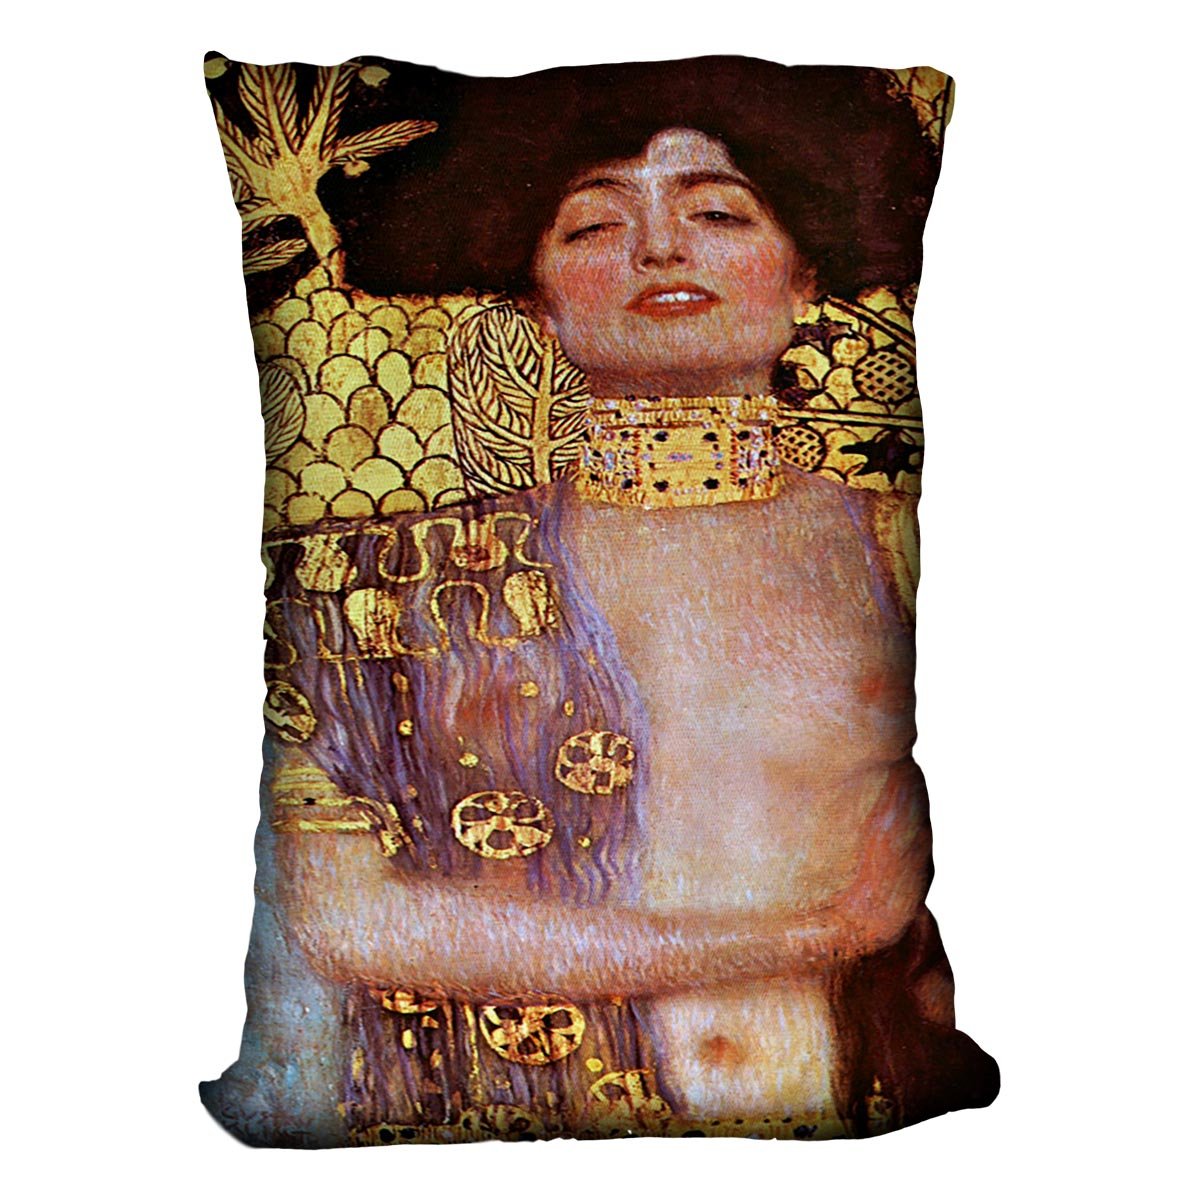 Judith by Klimt Throw Pillow